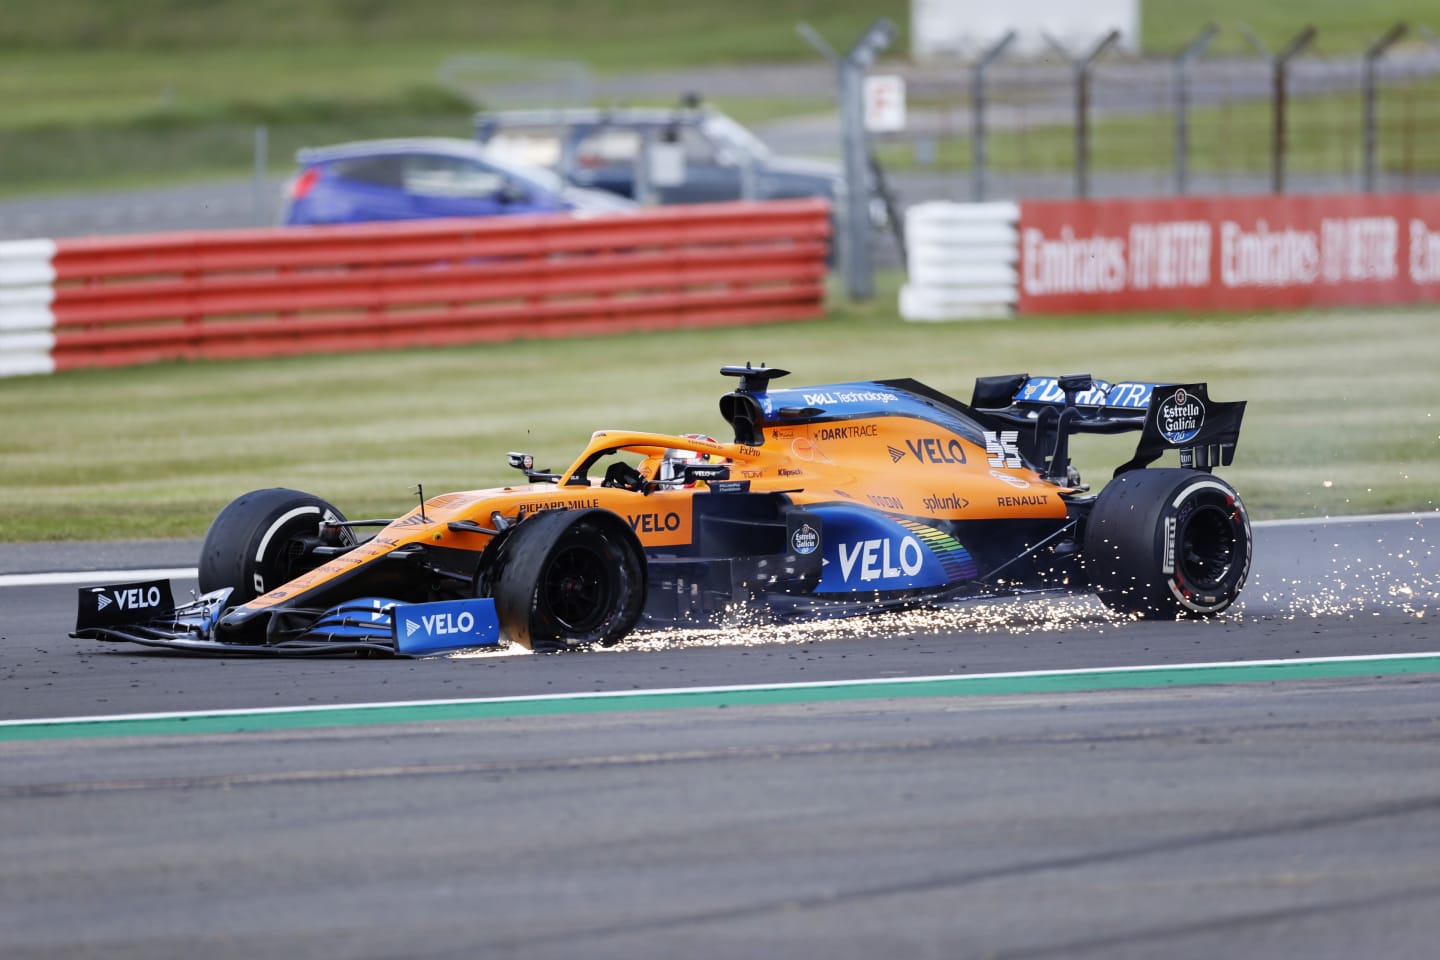 NORTHAMPTON, ENGLAND - AUGUST 02: Carlos Sainz of Spain driving the (55) McLaren F1 Team MCL35